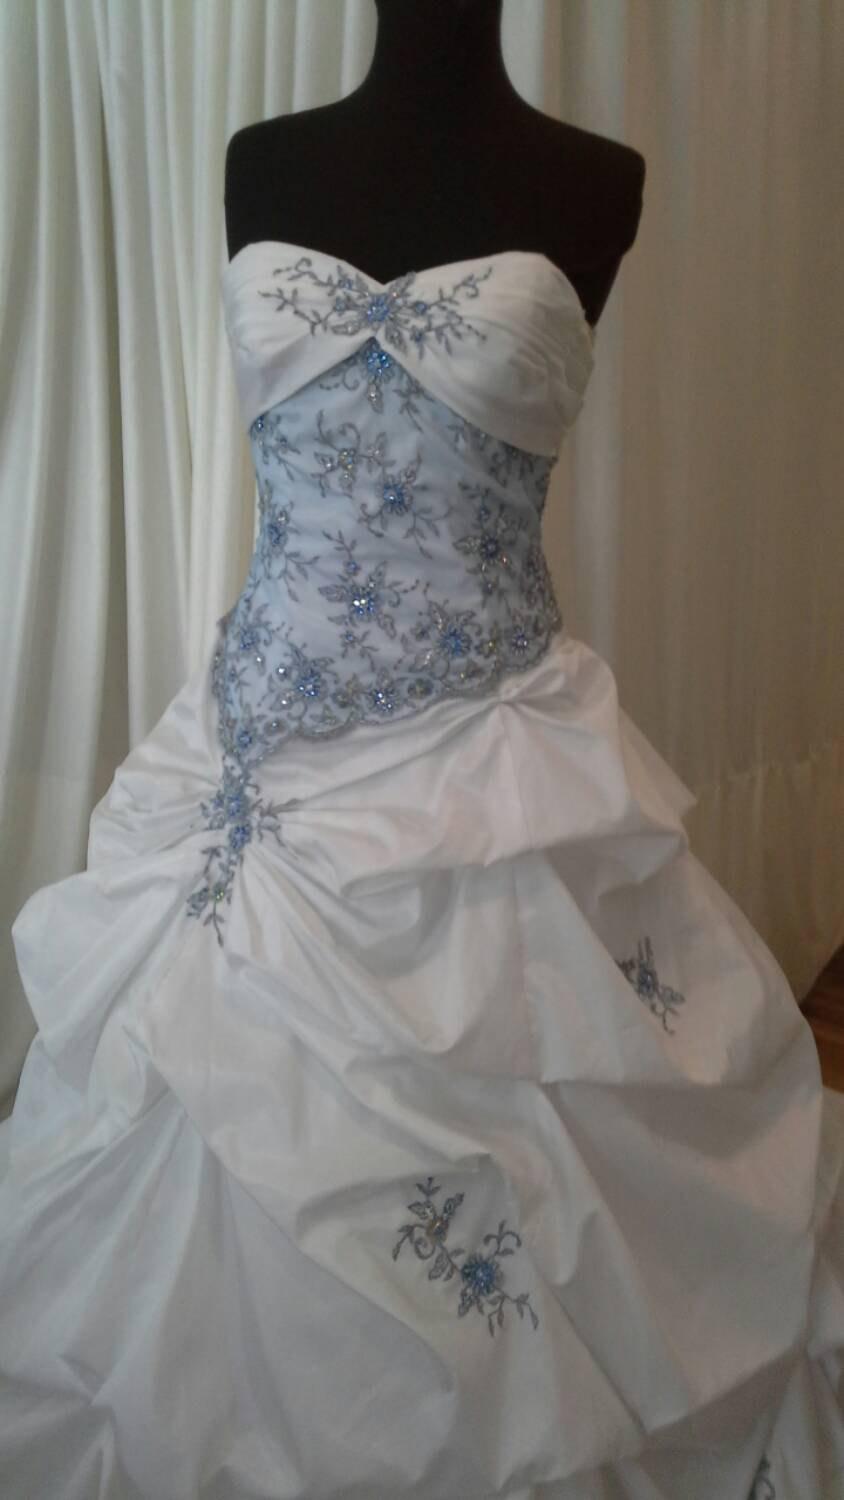 Wedding - White and blue "fairytale" ballgown/wedding dress